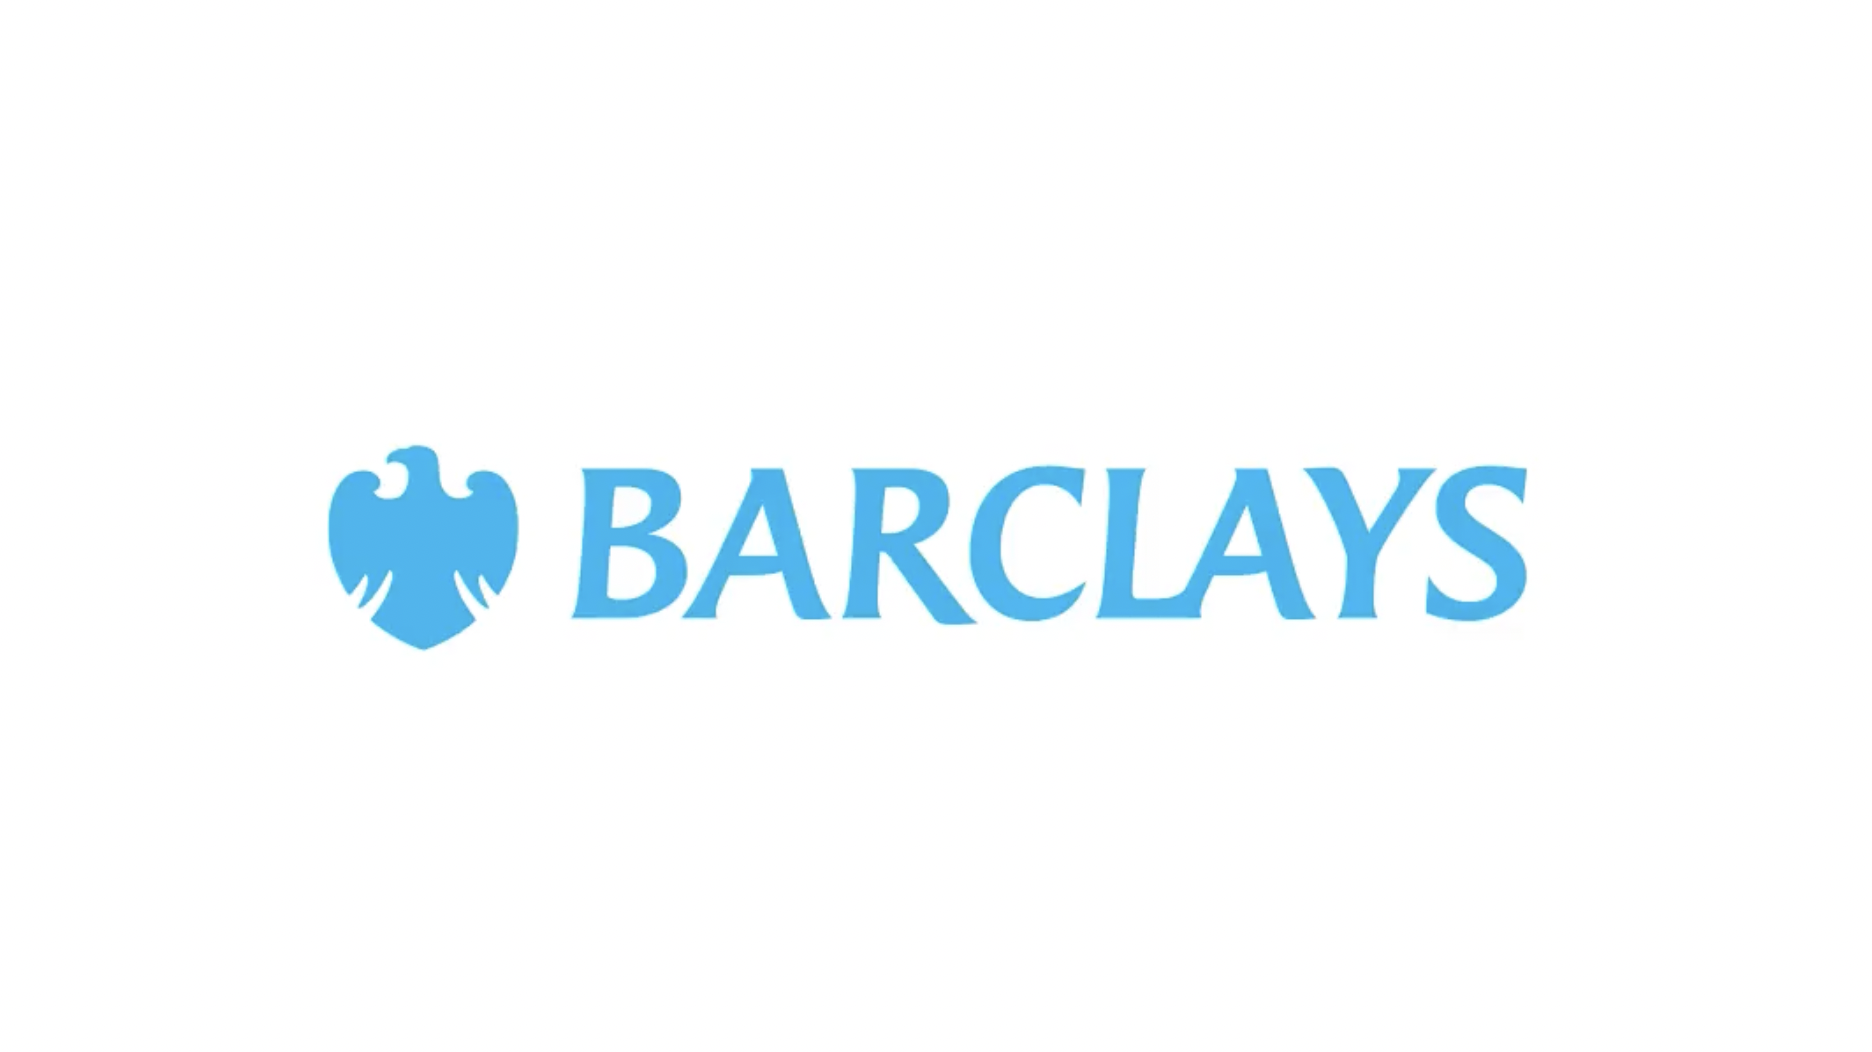 Barclays releases revised climate change statement & transition finance framework